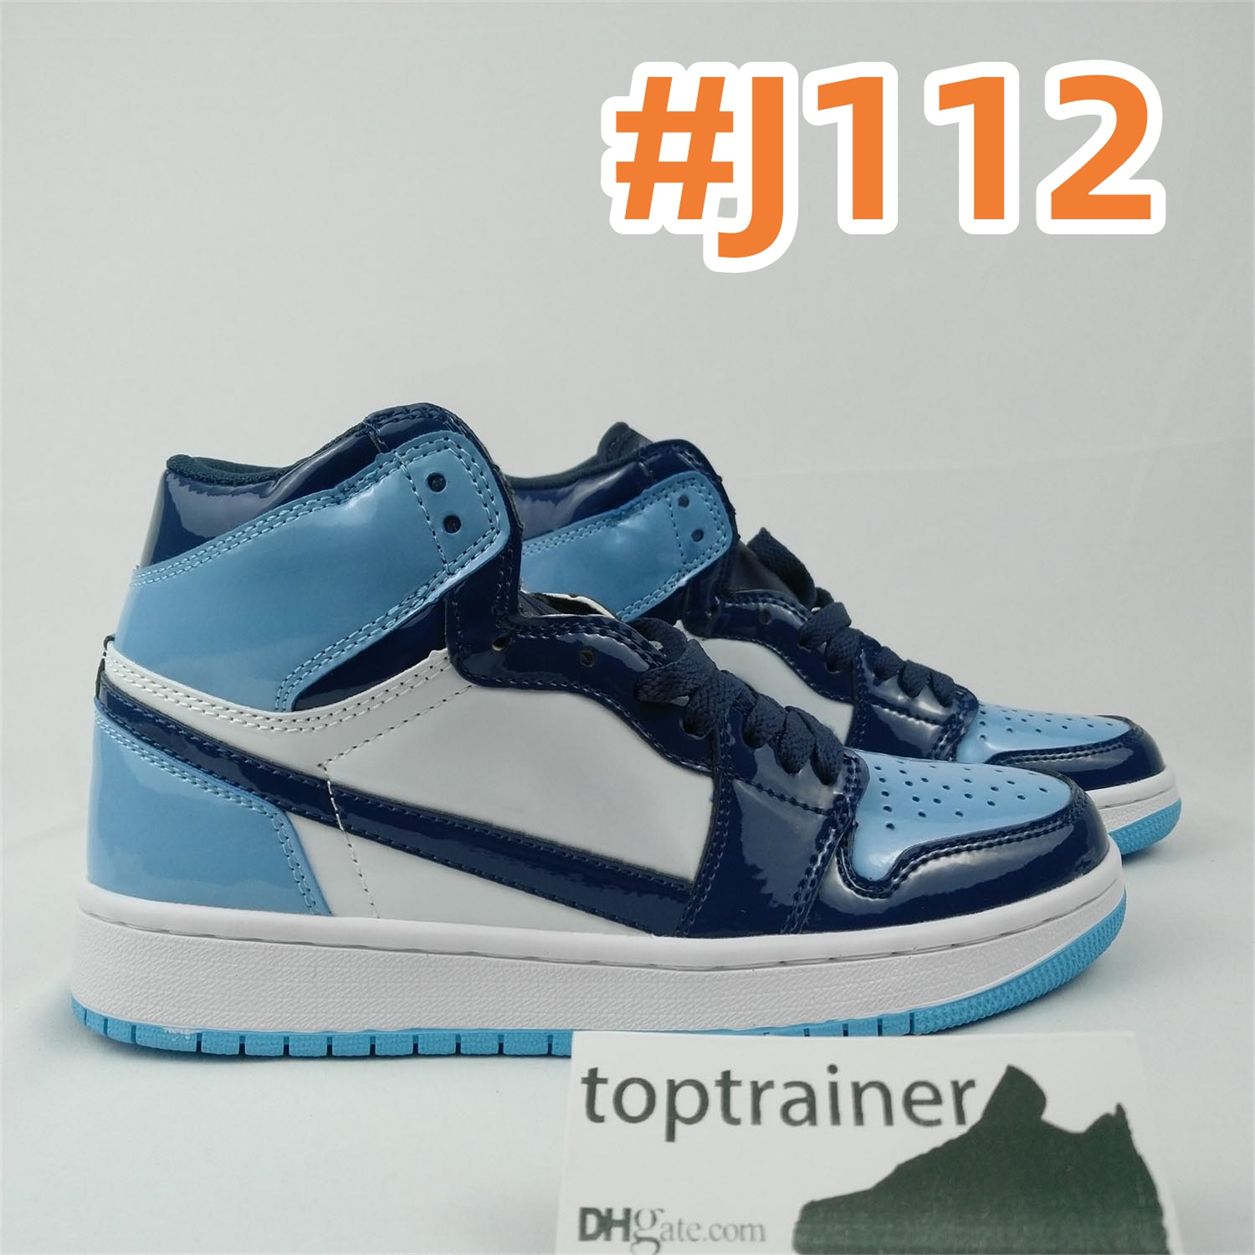 #J112